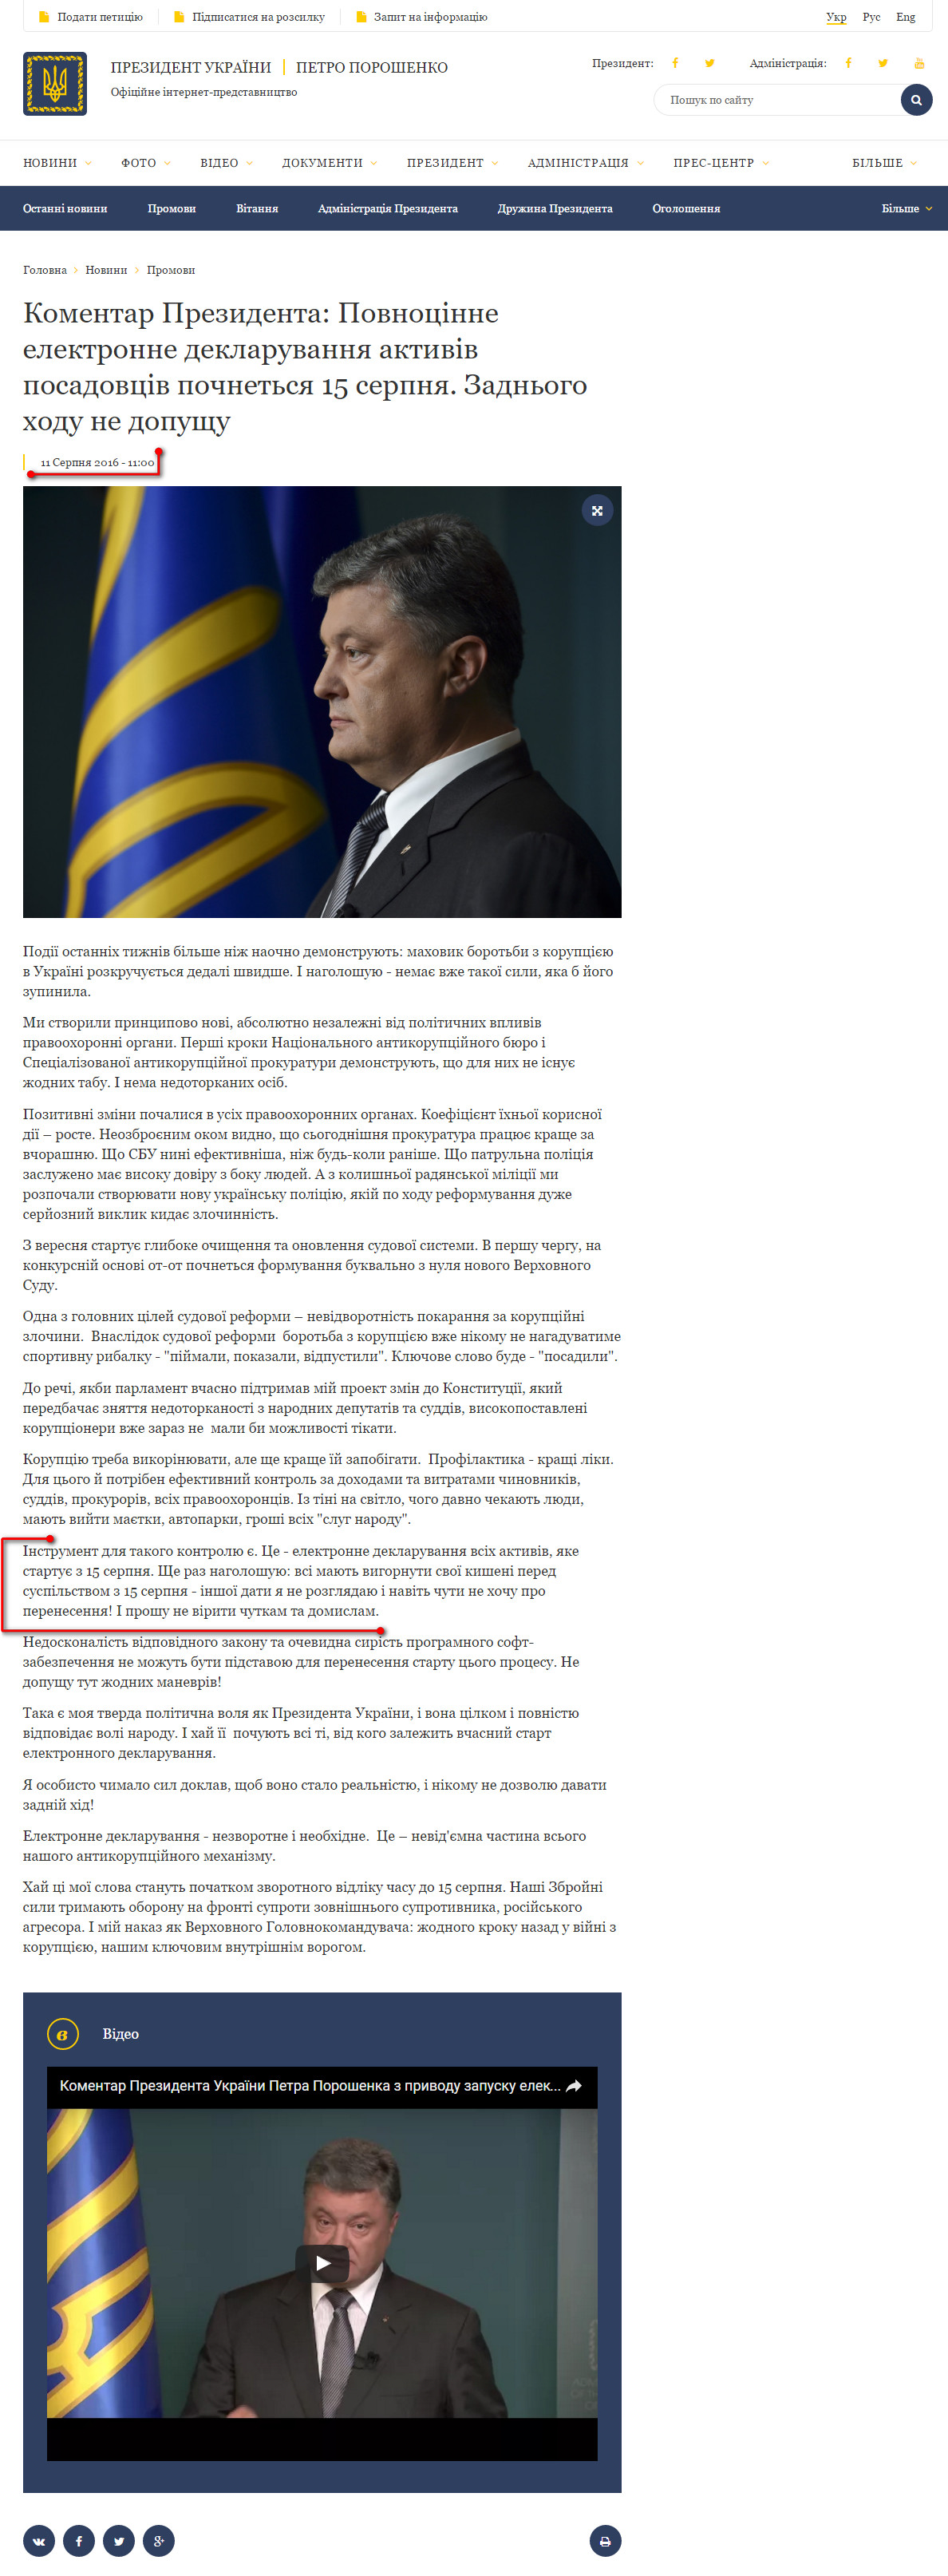 http://www.president.gov.ua/news/komentar-prezidenta-povnocinne-elektronne-deklaruvannya-akti-37847